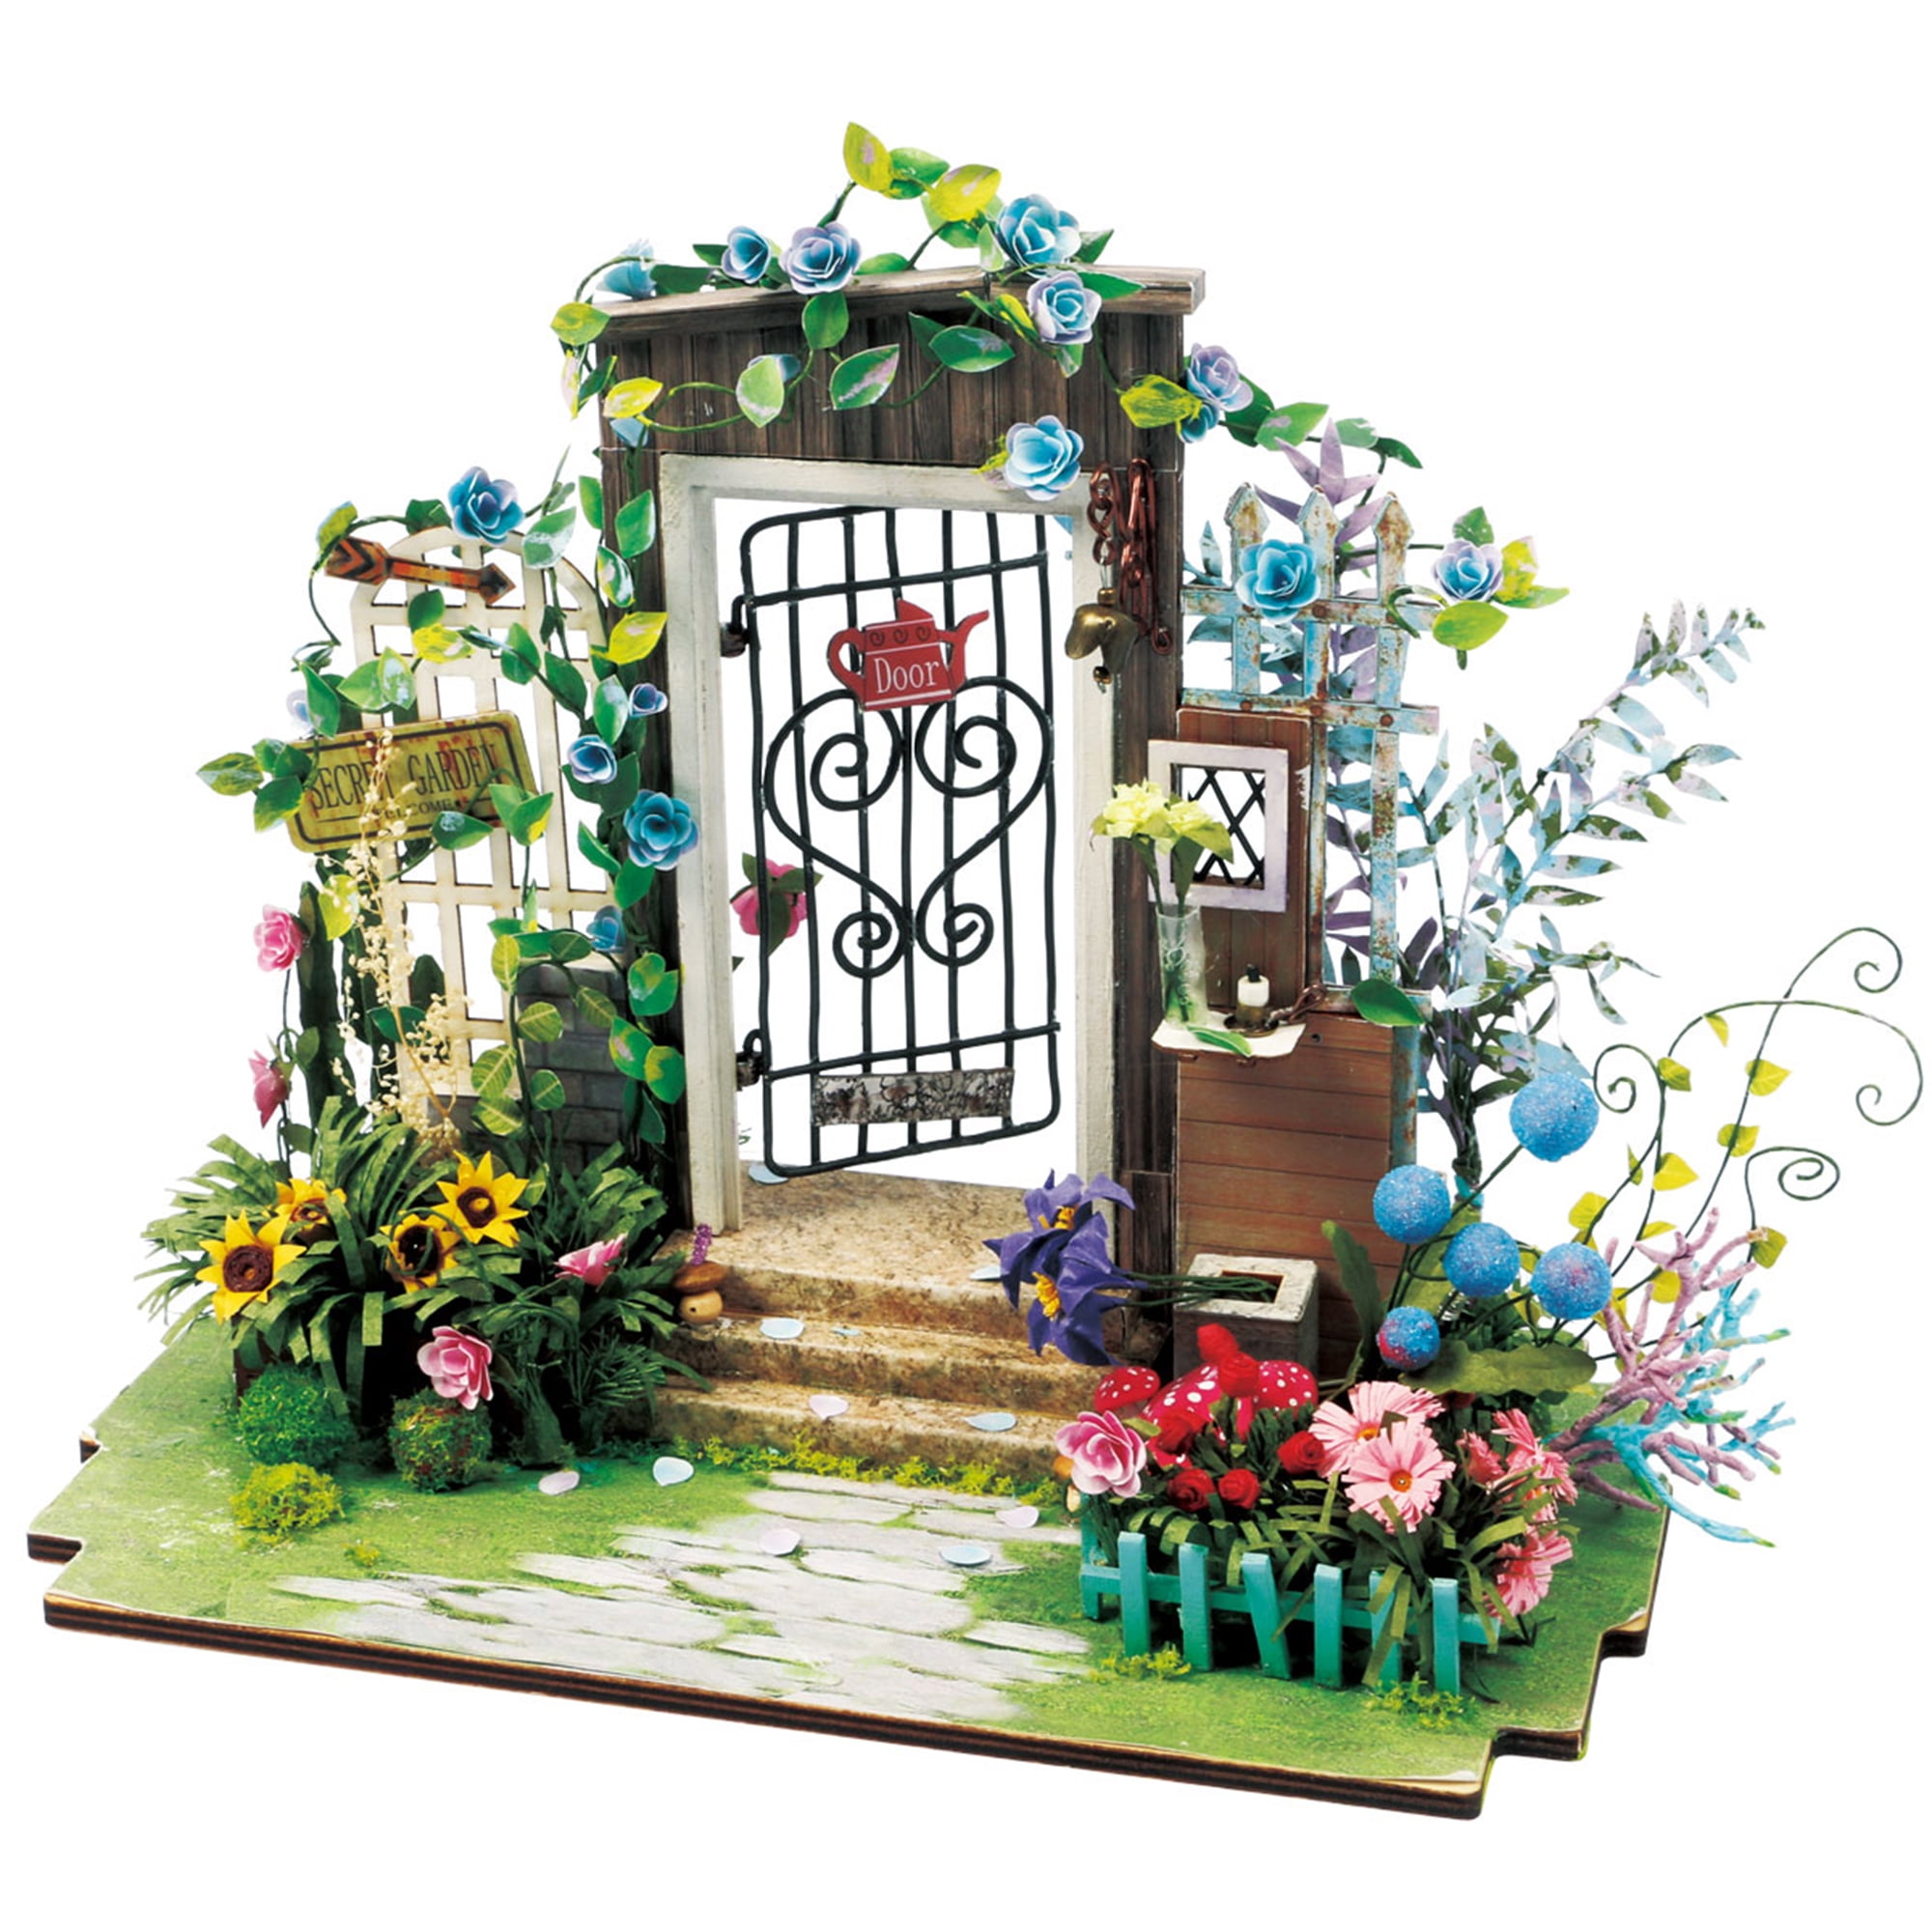 Details about   DIY Dollhouse Flower Garden Cafe House Miniature Dollhouse Kids LED Toy W6T3 